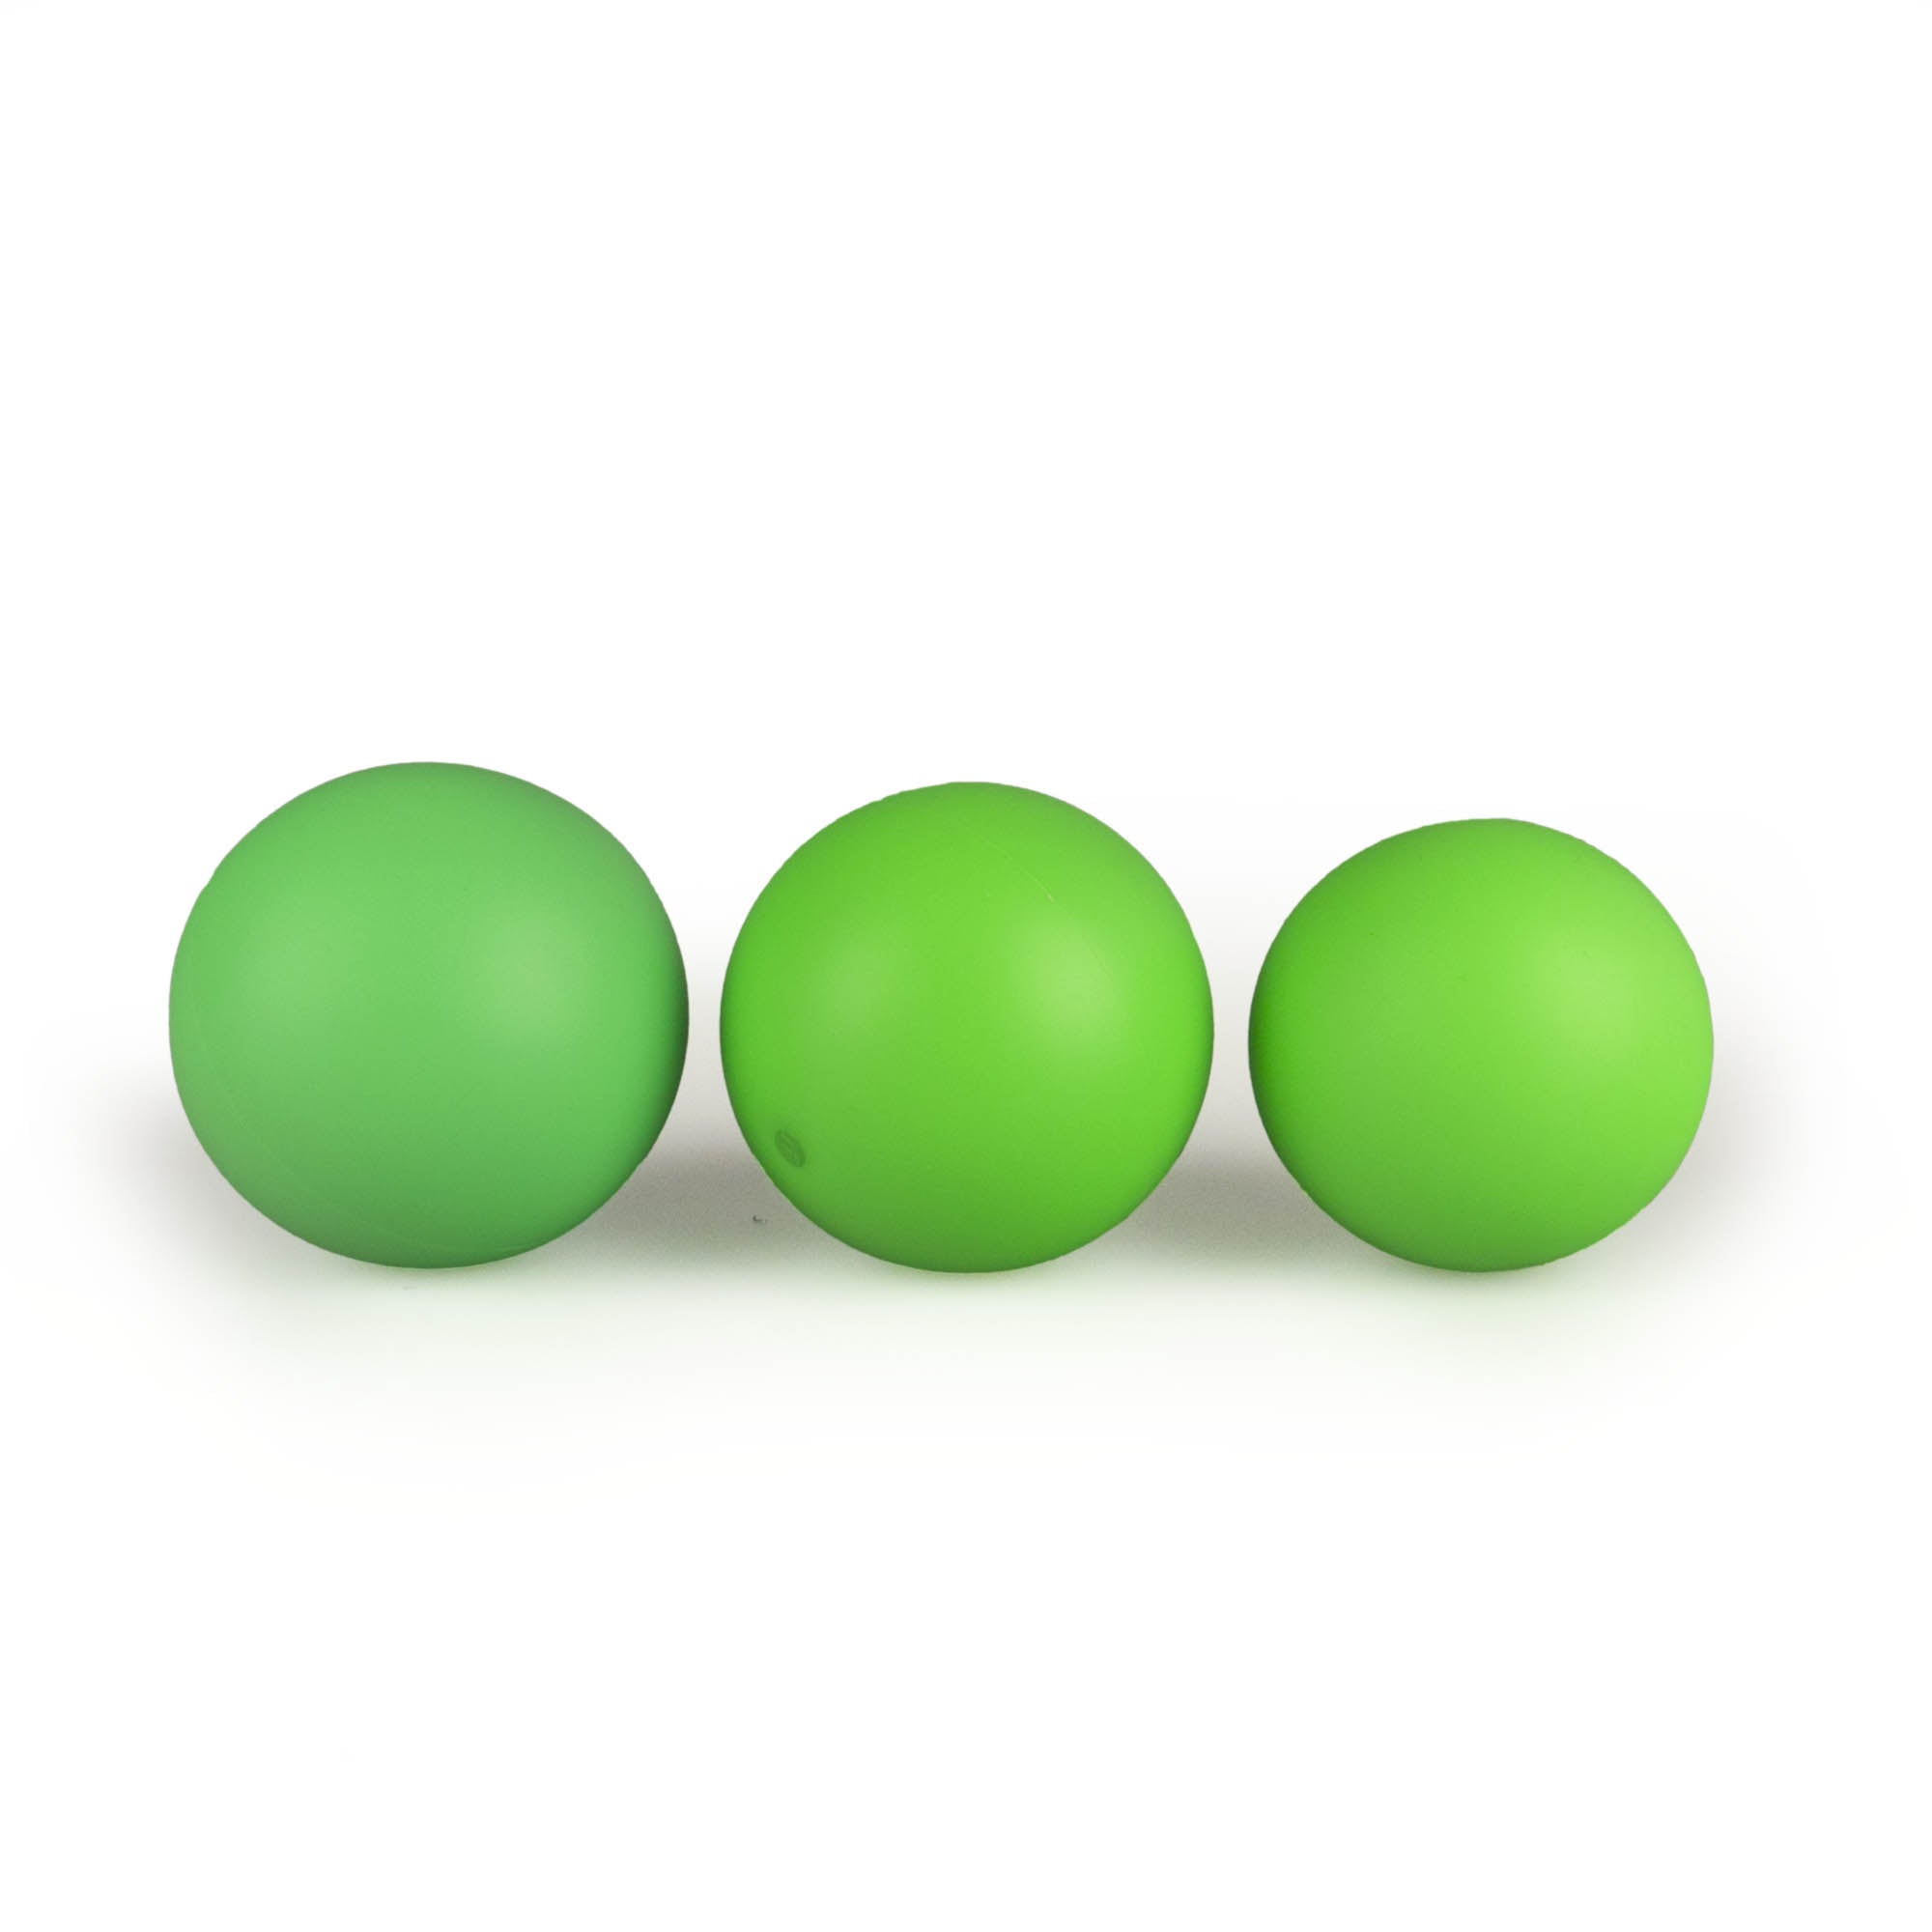 MMX juggling ball comparison shot in green